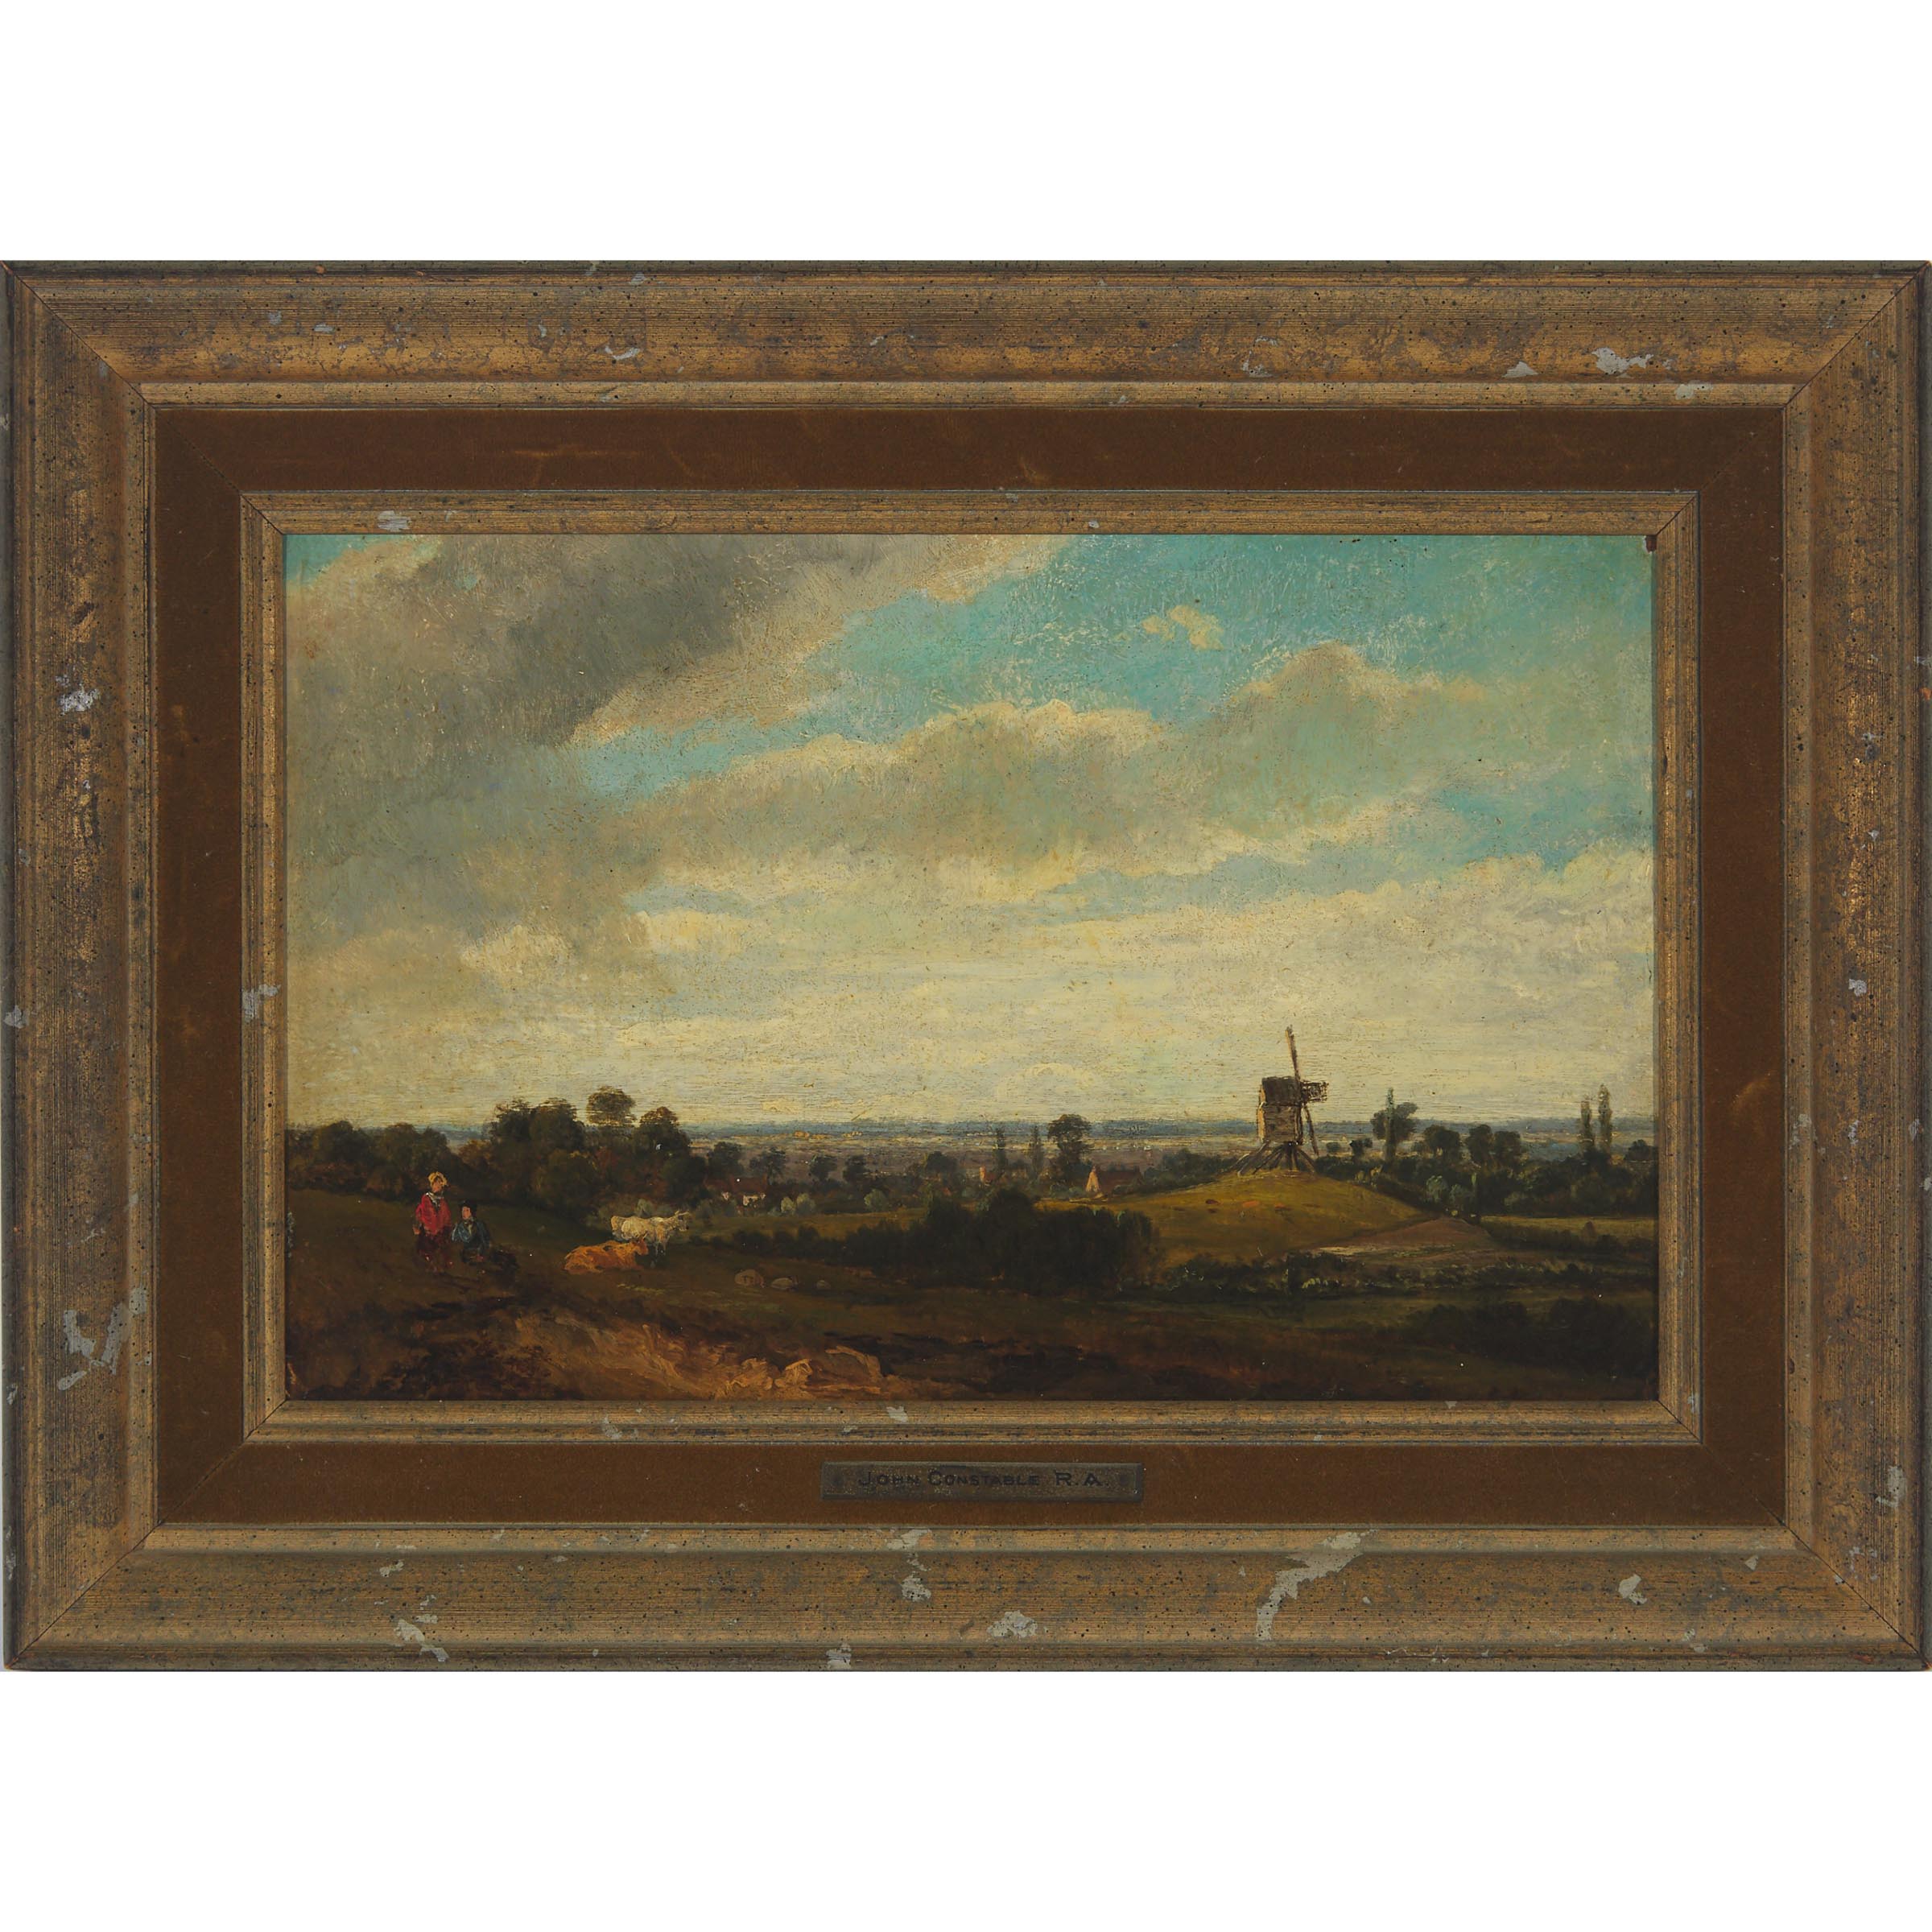 Follower of John Constable (1776-1837)